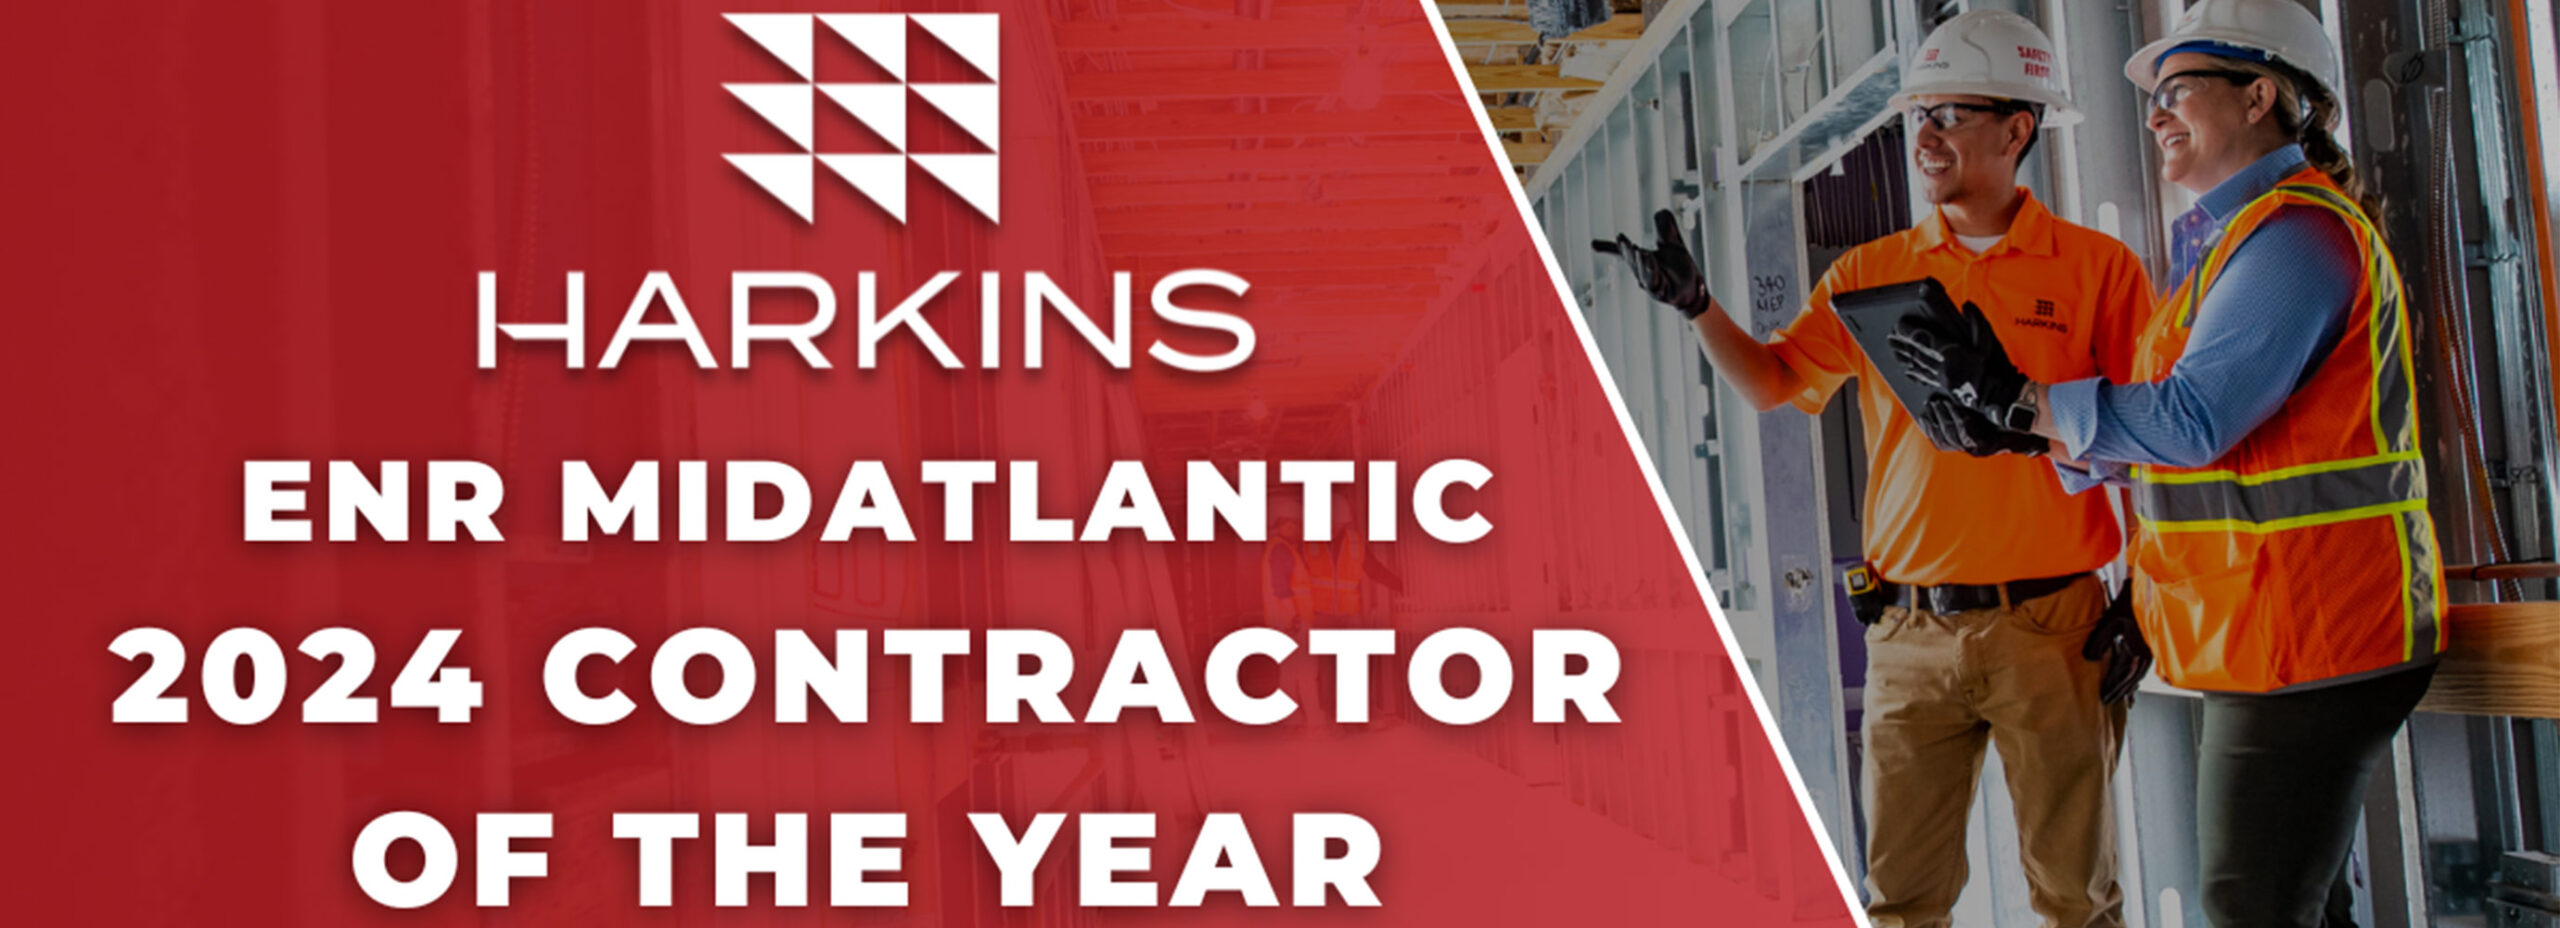 Harkins Wins ENR MidAtlantic 2024 Contractor of the Year Award